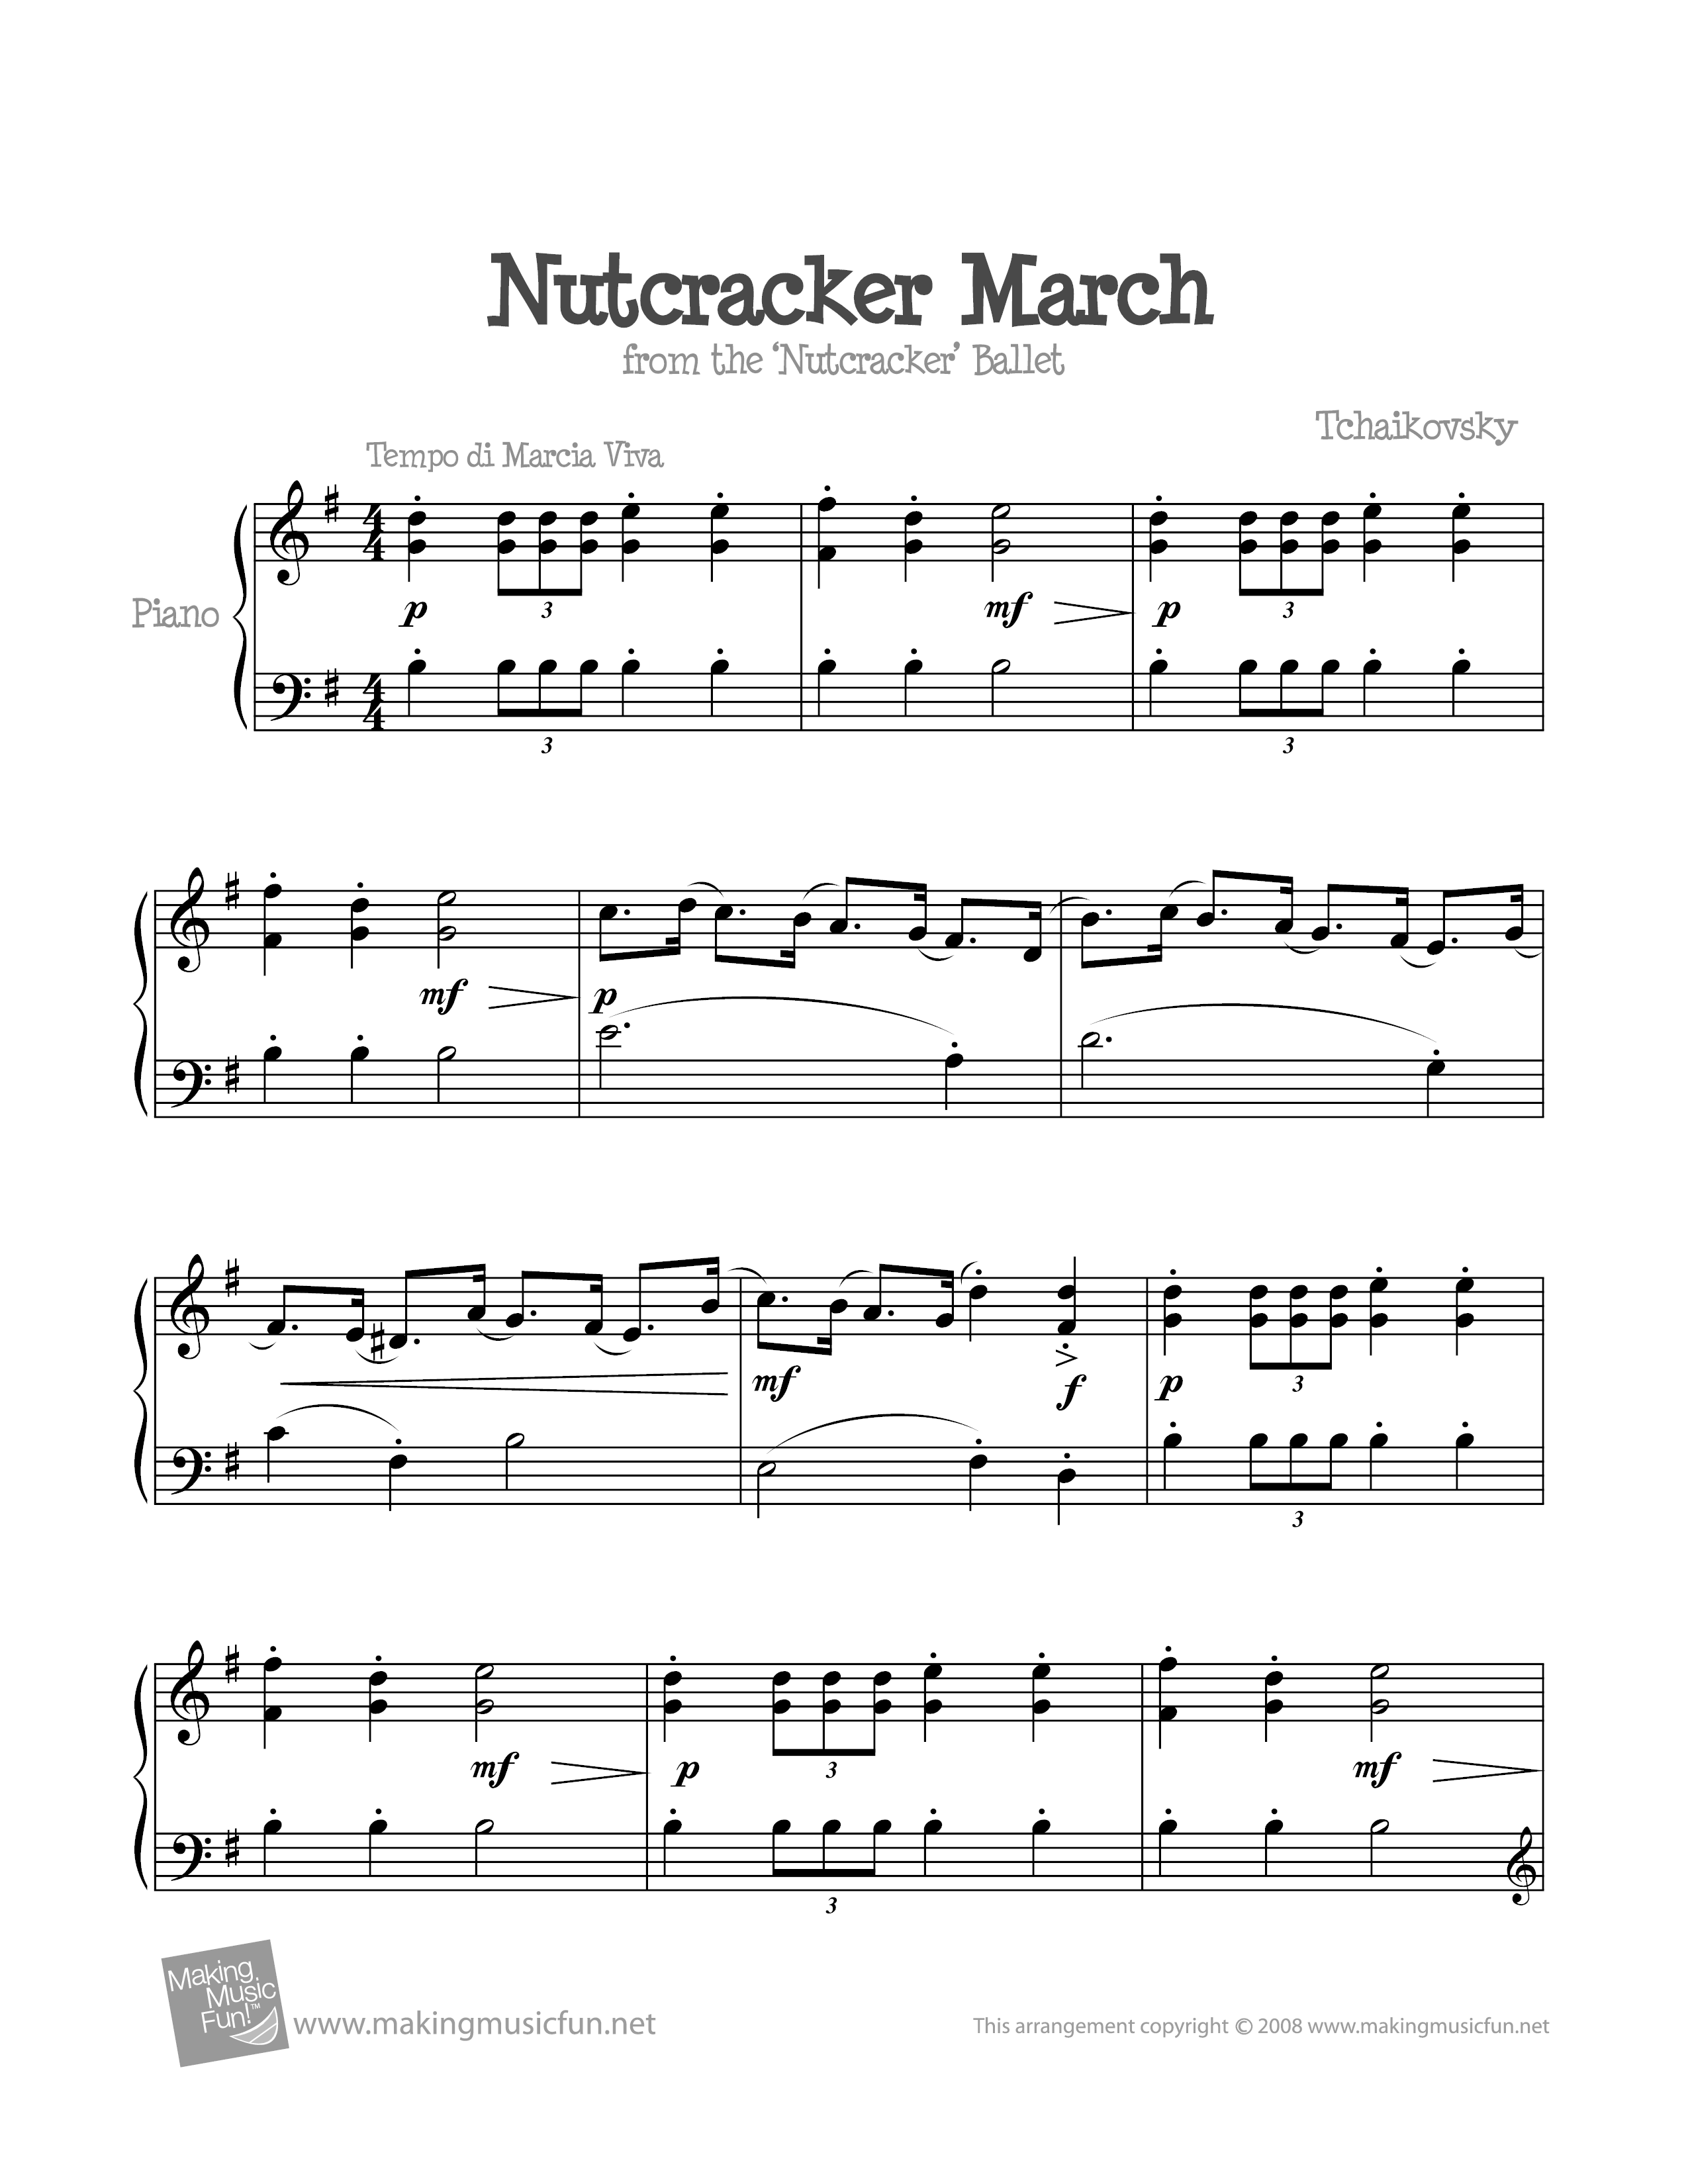 March from the Nutcracker Score